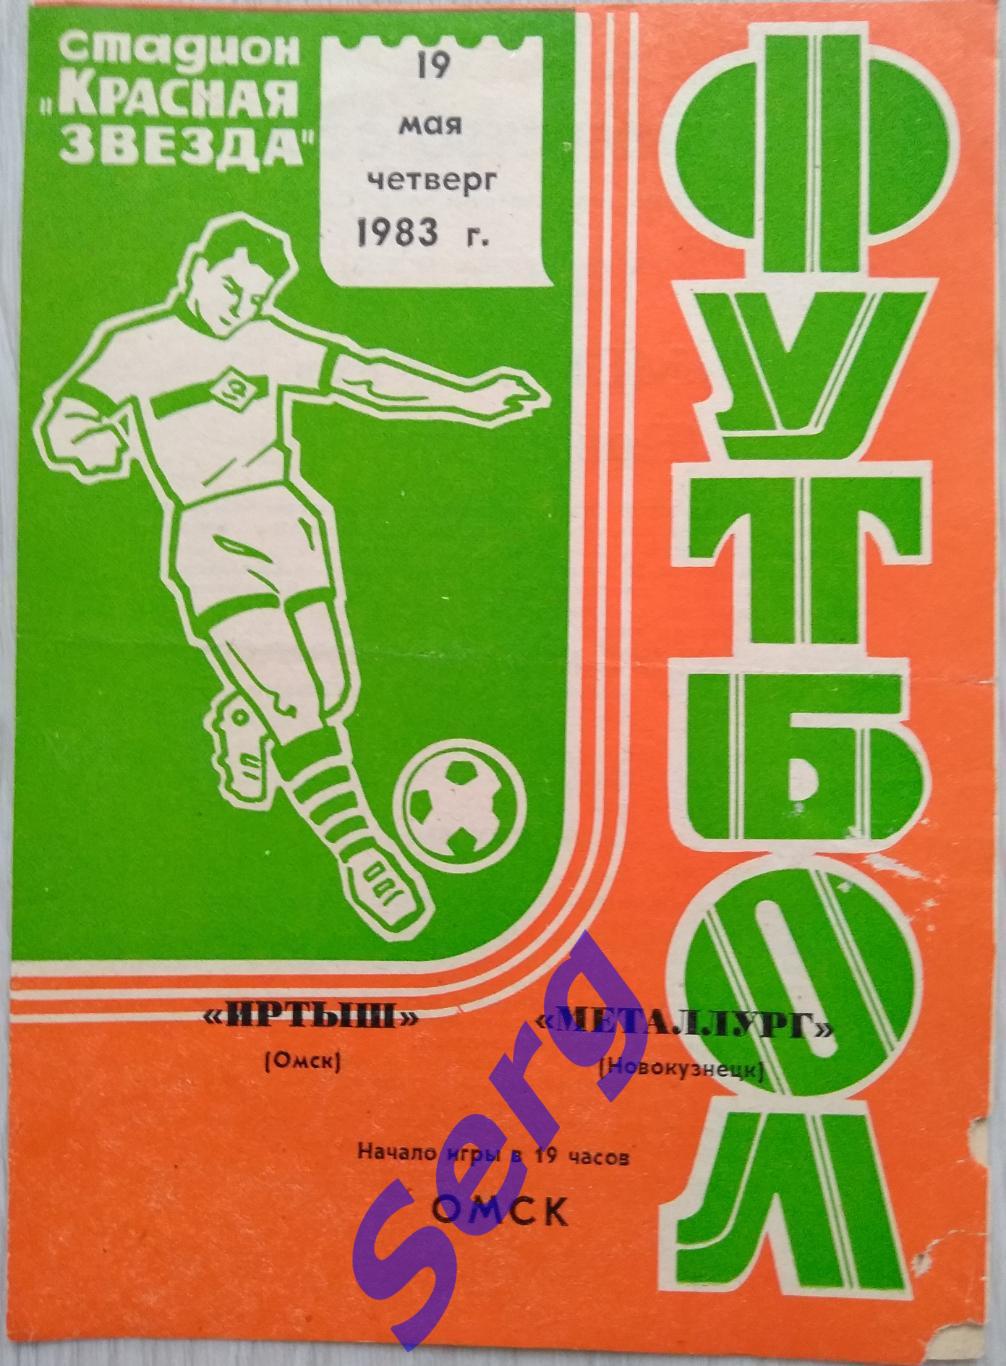 Иртыш Омск - Металлург Новокузнецк - 19 мая 1983 год